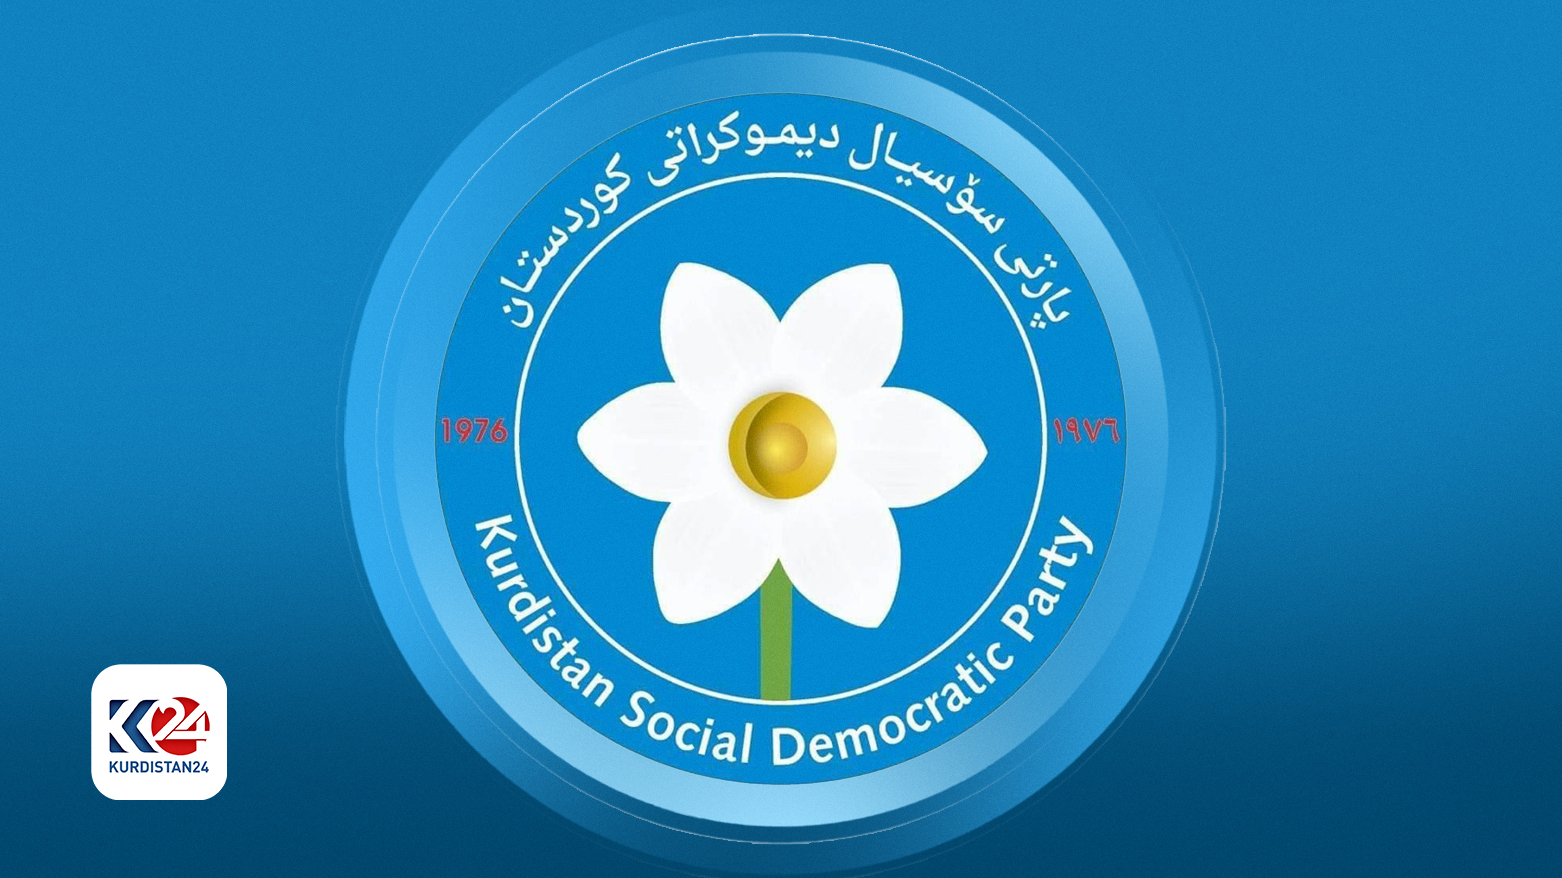 لۆگۆی پارتی سۆسیال دیموکراتی کوردستان